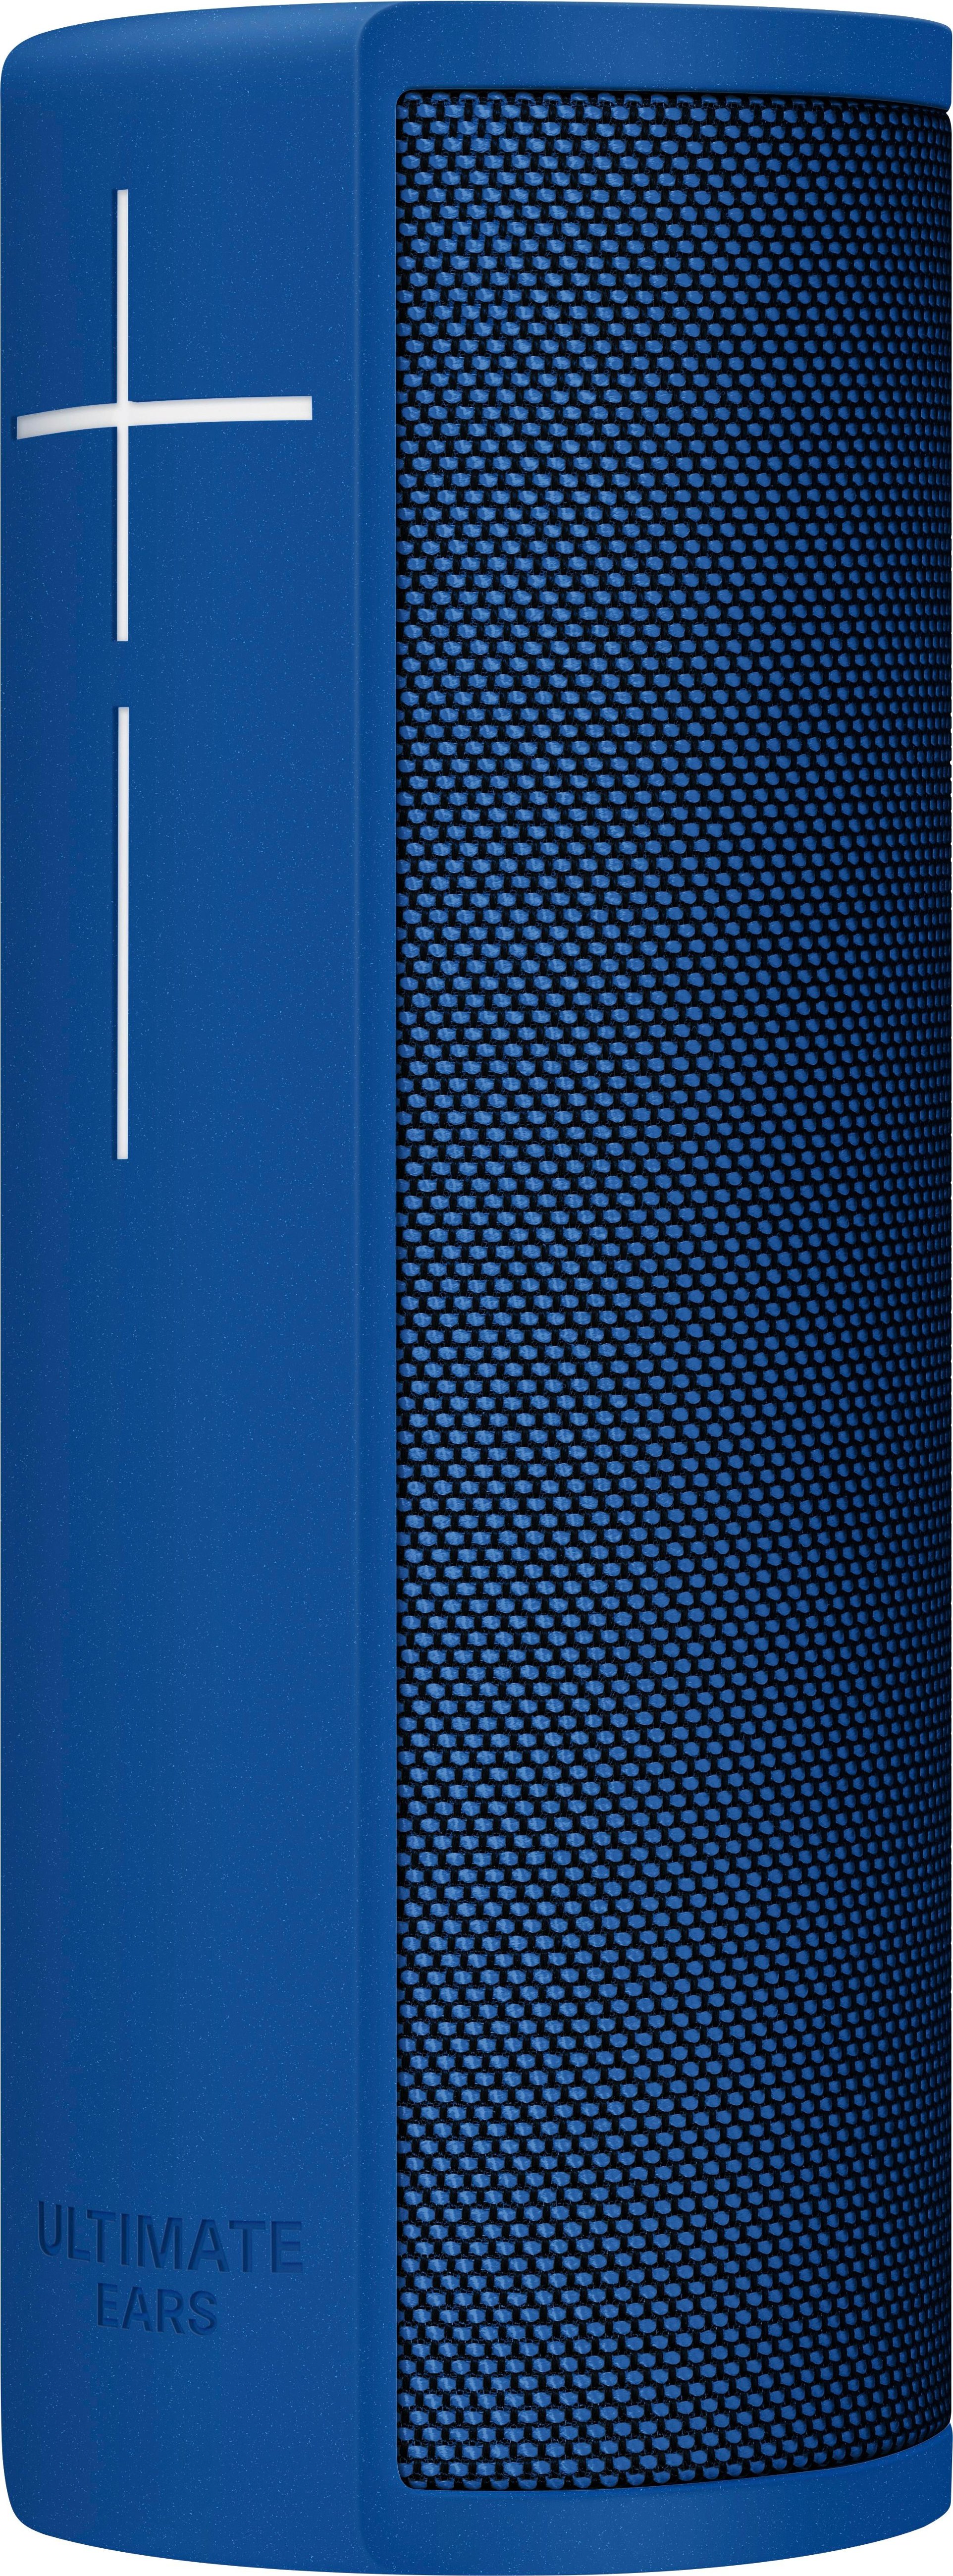 Left View: Ultimate Ears - MEGABLAST Smart Portable Wi-Fi and Bluetooth Speaker with Alexa - Blue steel